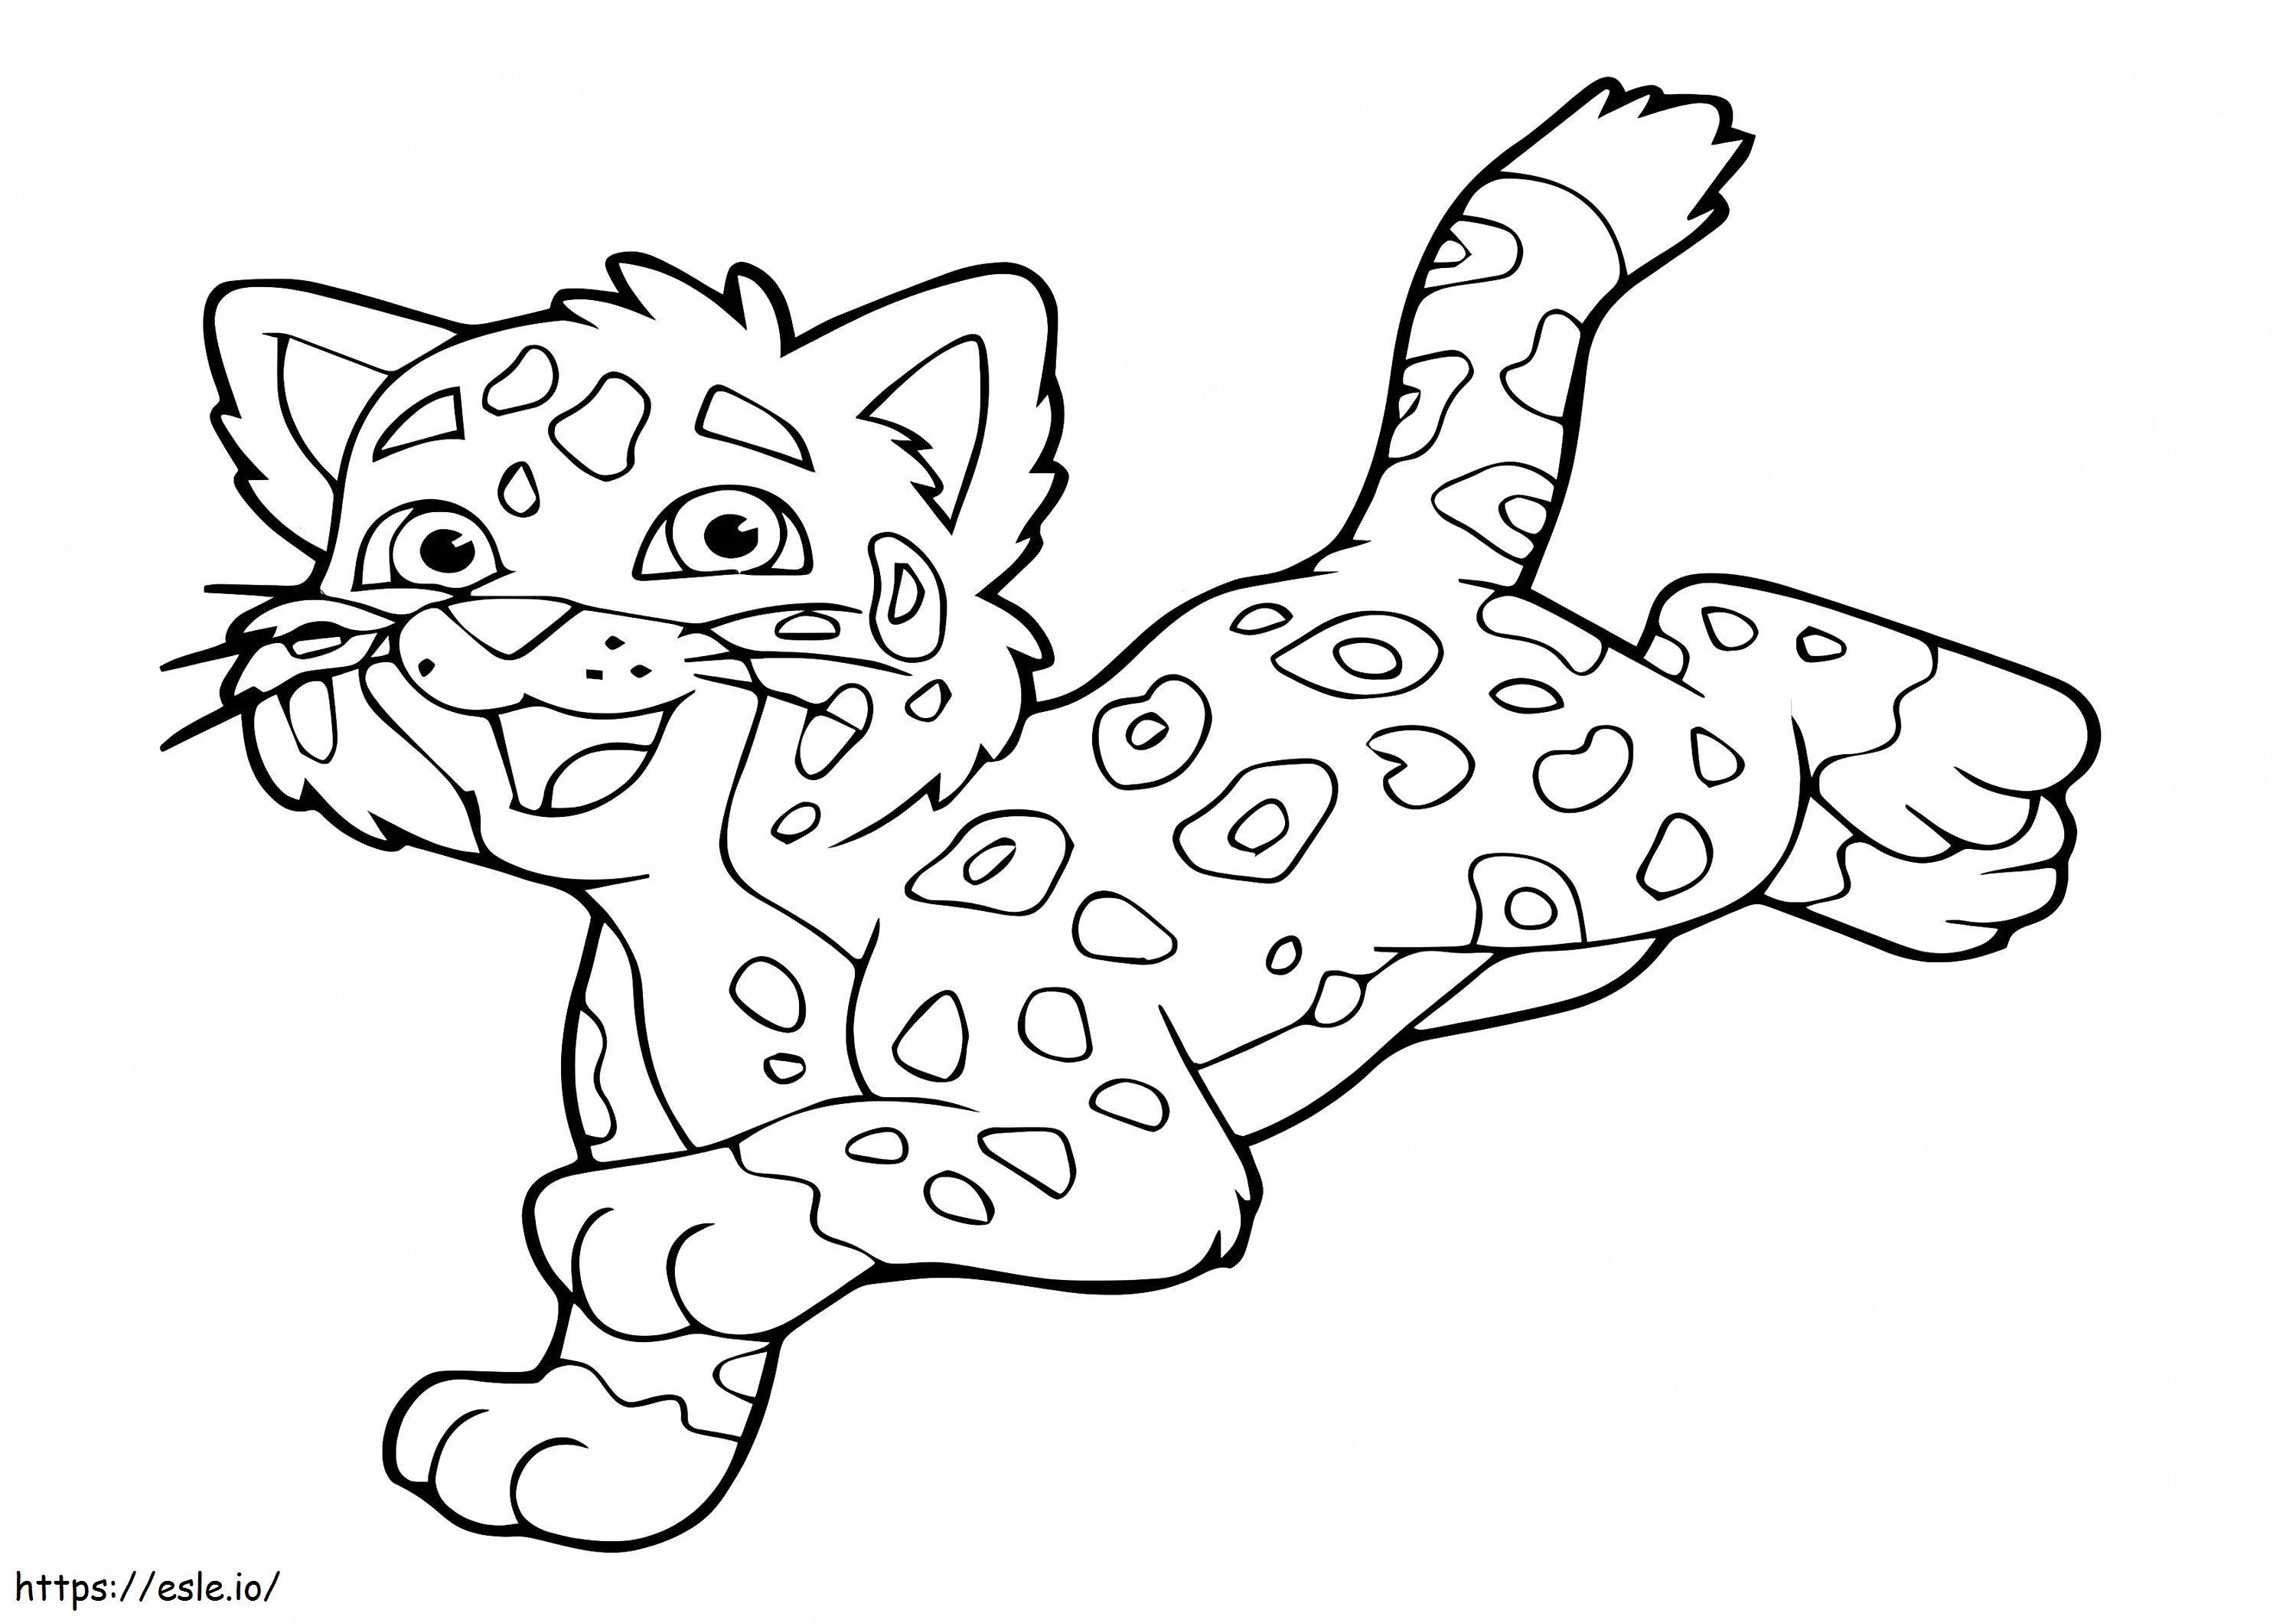 Funny Jaguar coloring page